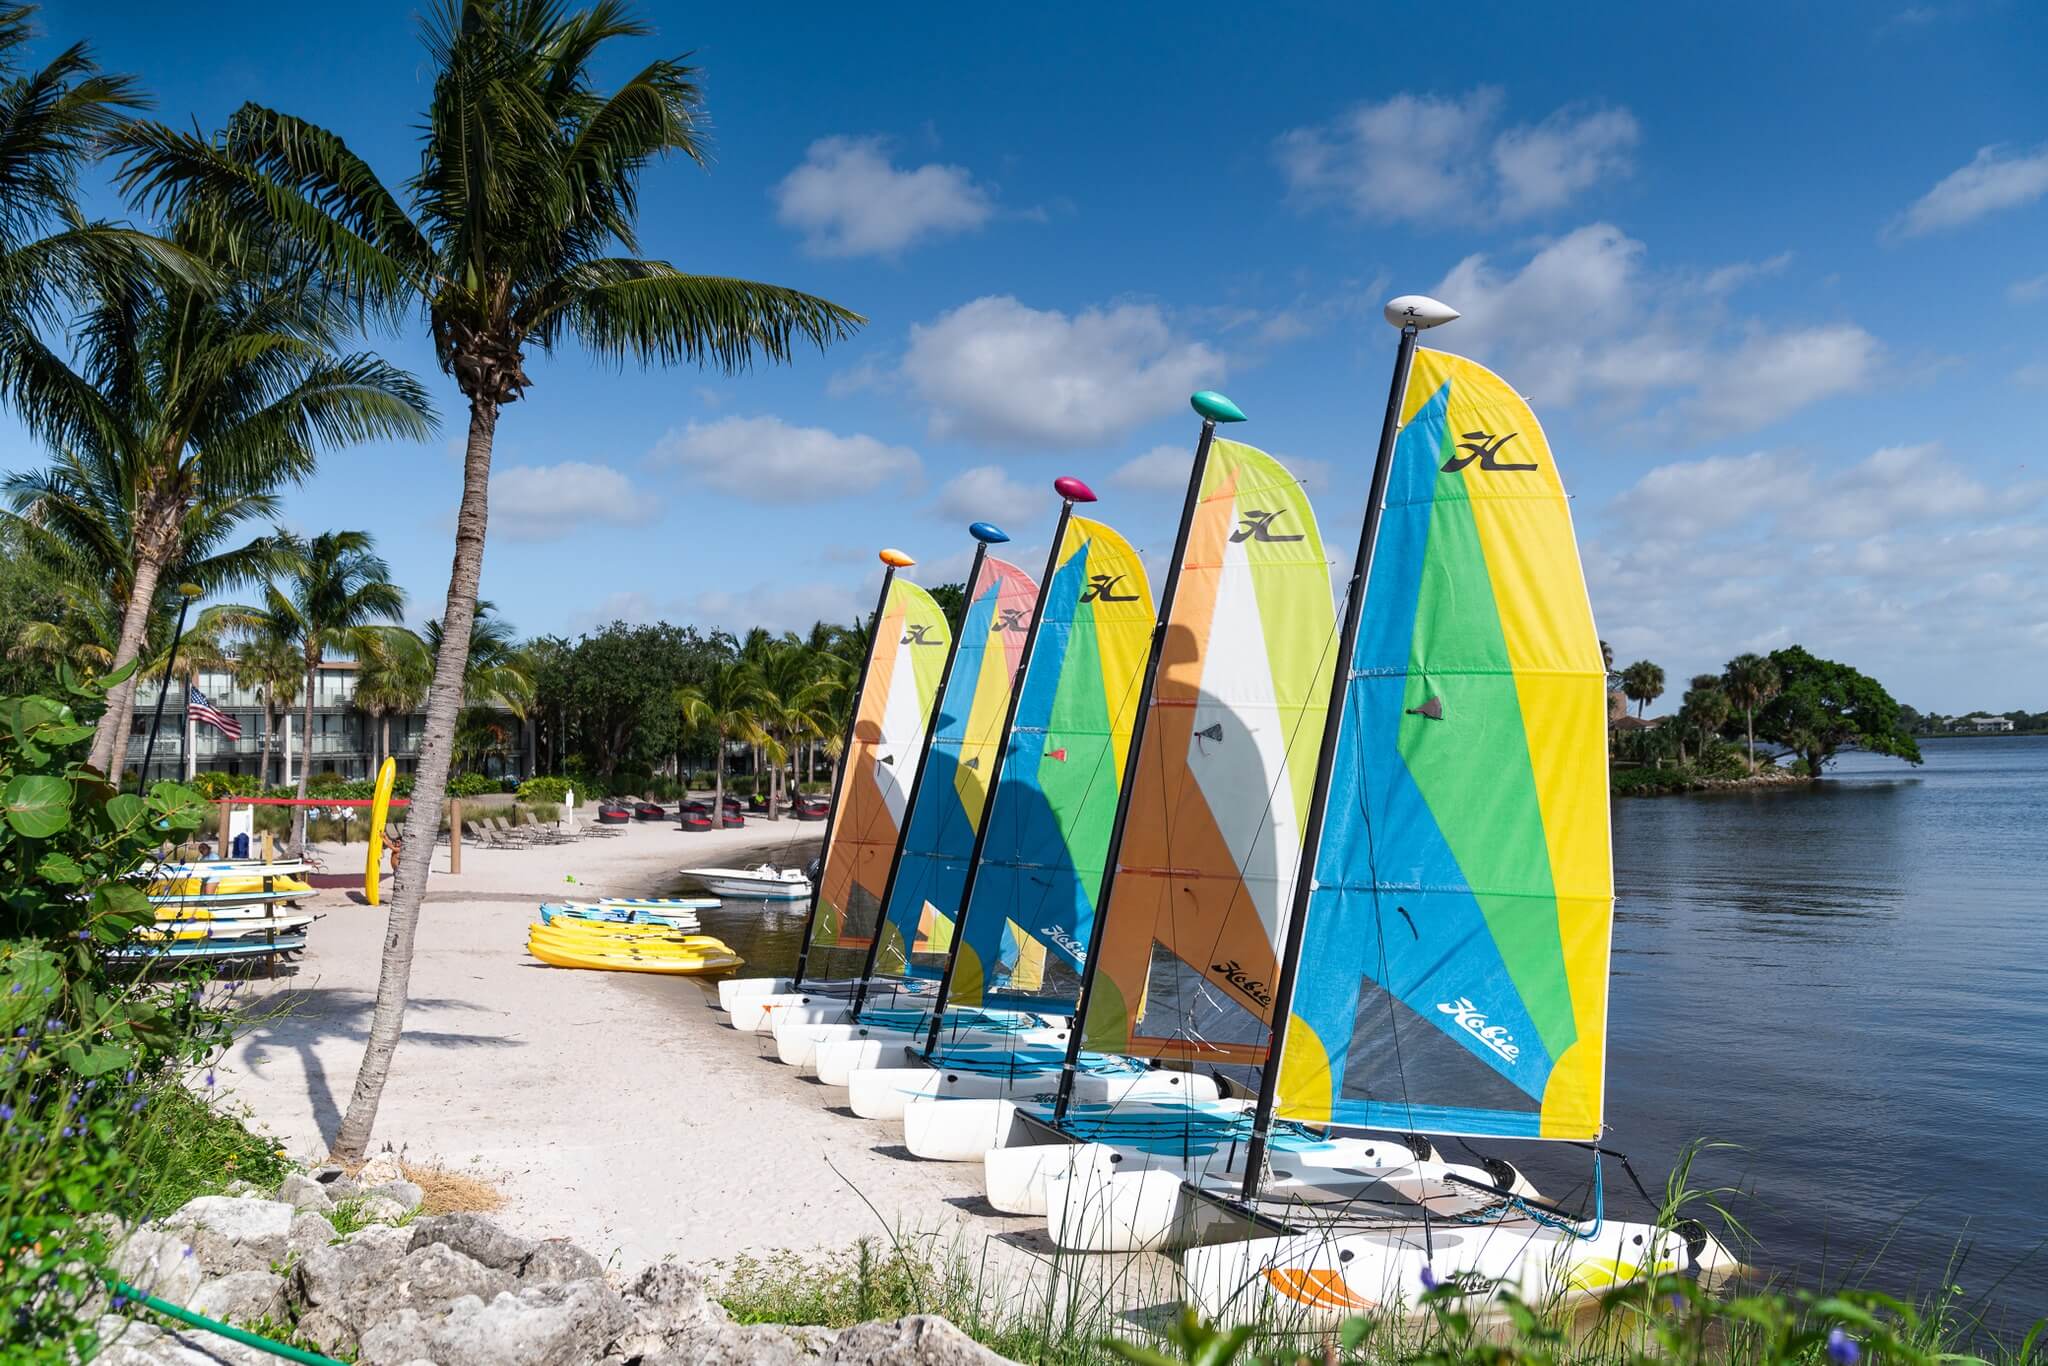 Sandpiper Bay Resort sailboats courtesy . 